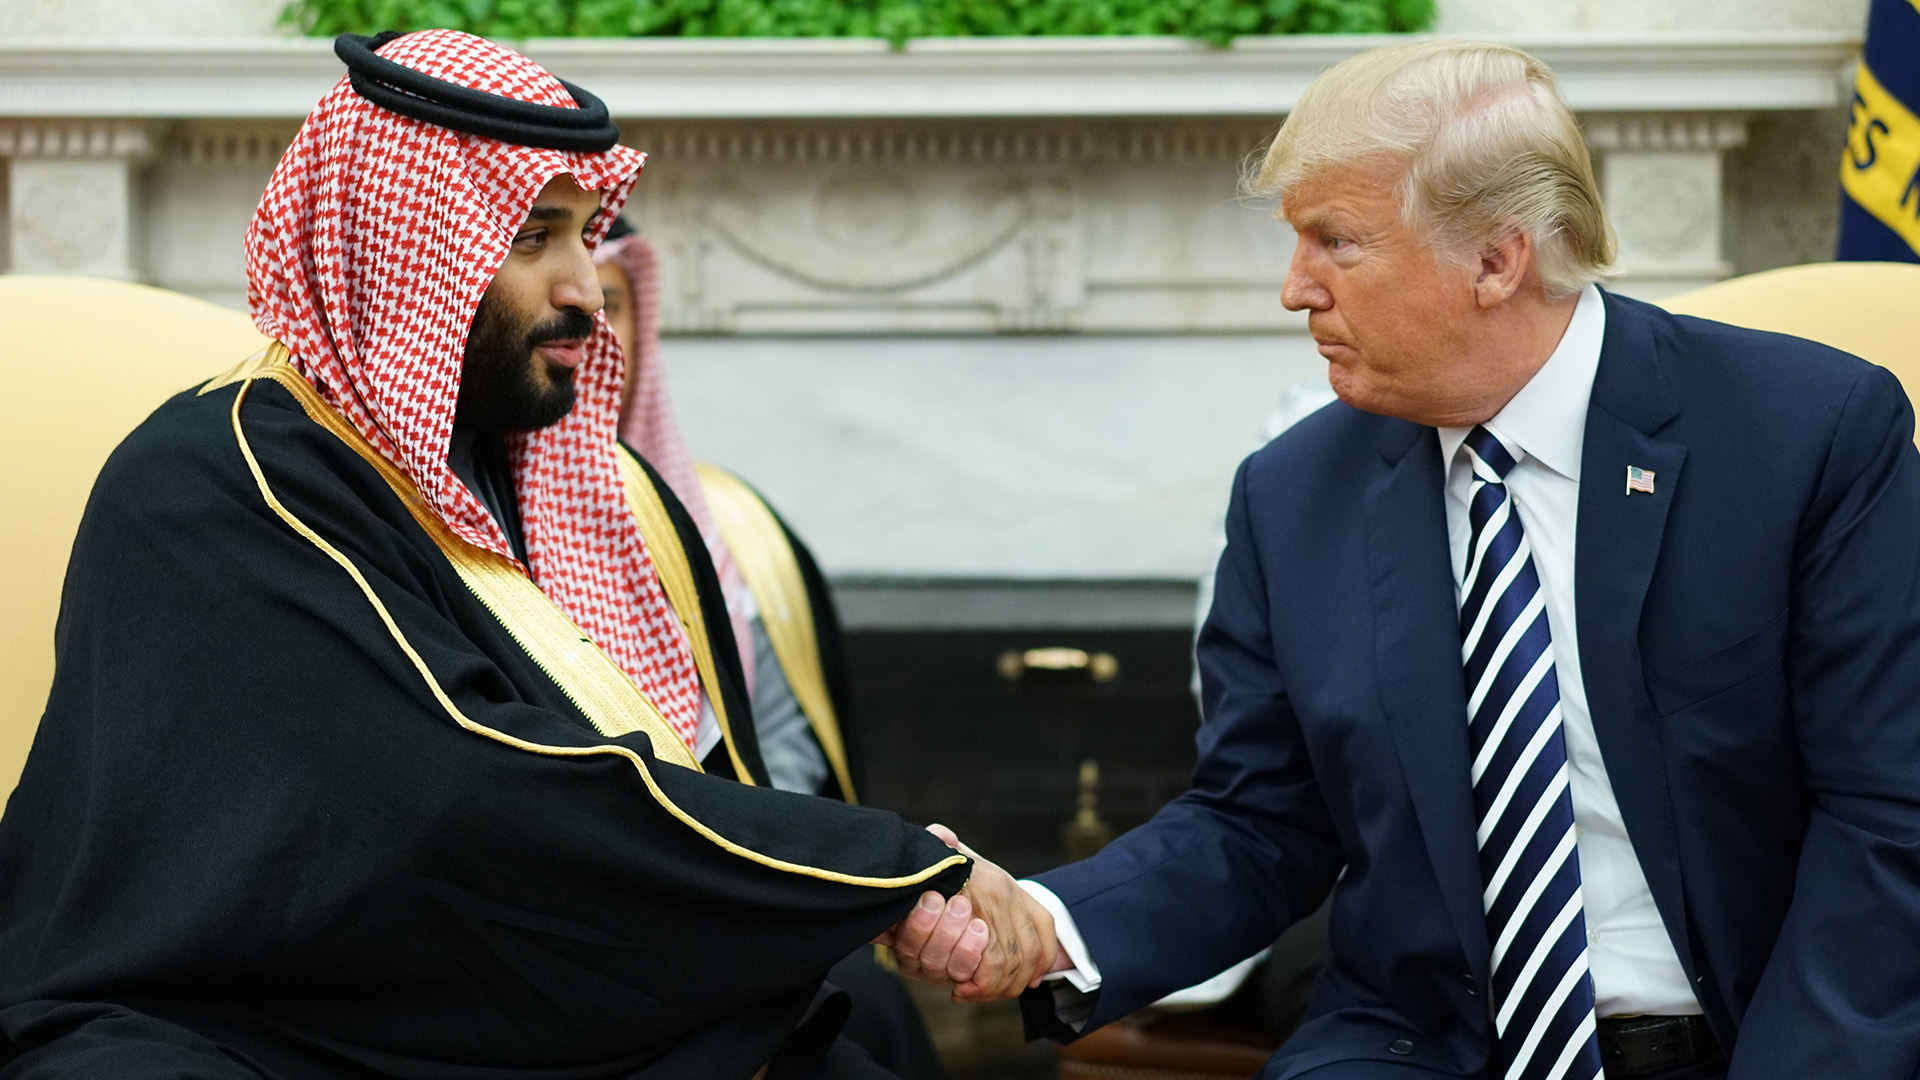 Donald Trump quitó responsabilidad a Arabia Saudita por el crimen de Khashoggi: "El mundo es un lugar violento"